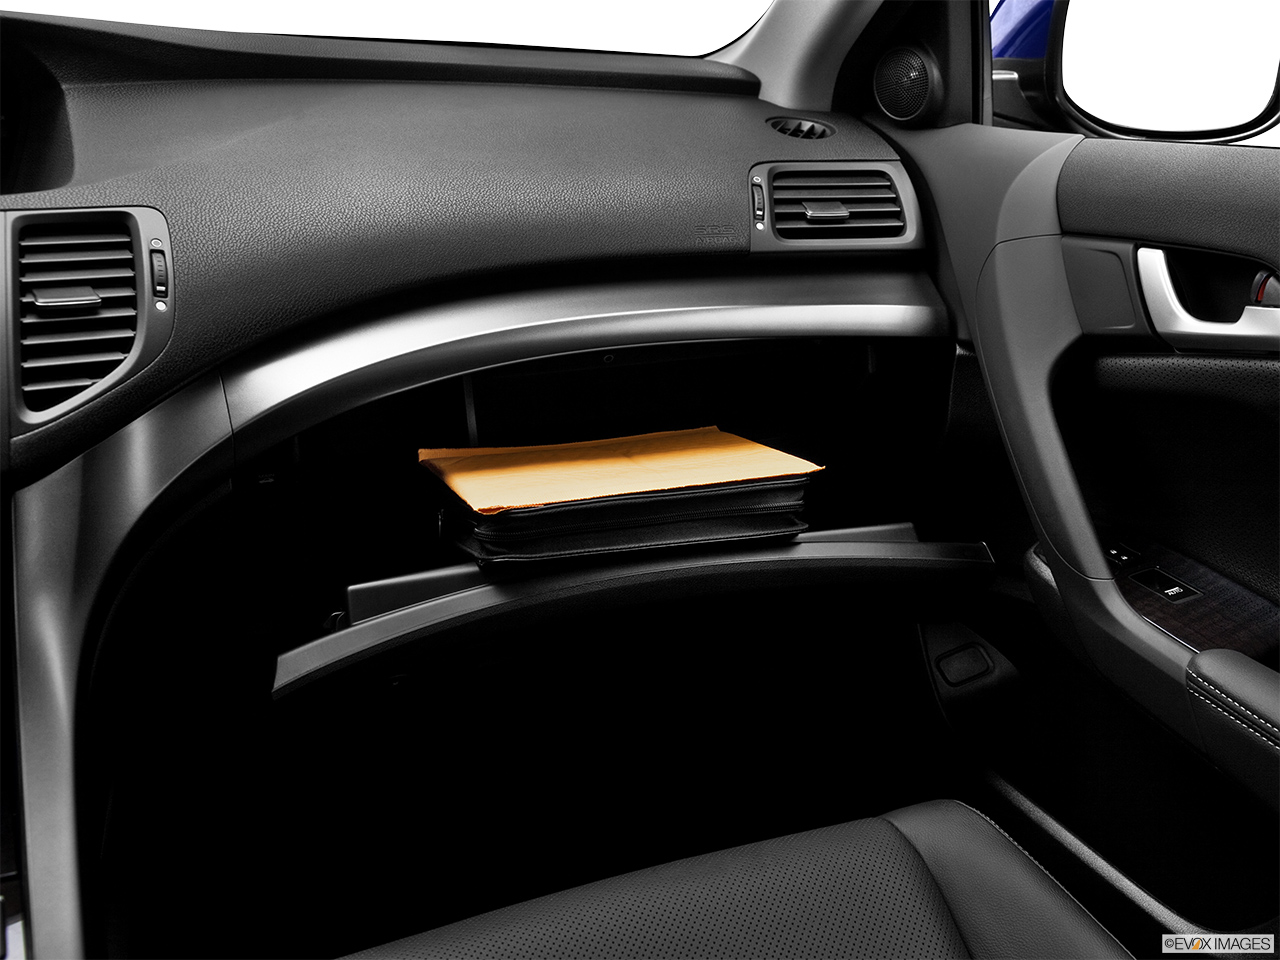 2012 Acura TSX TSX 5-speed Automatic Glove box open. 